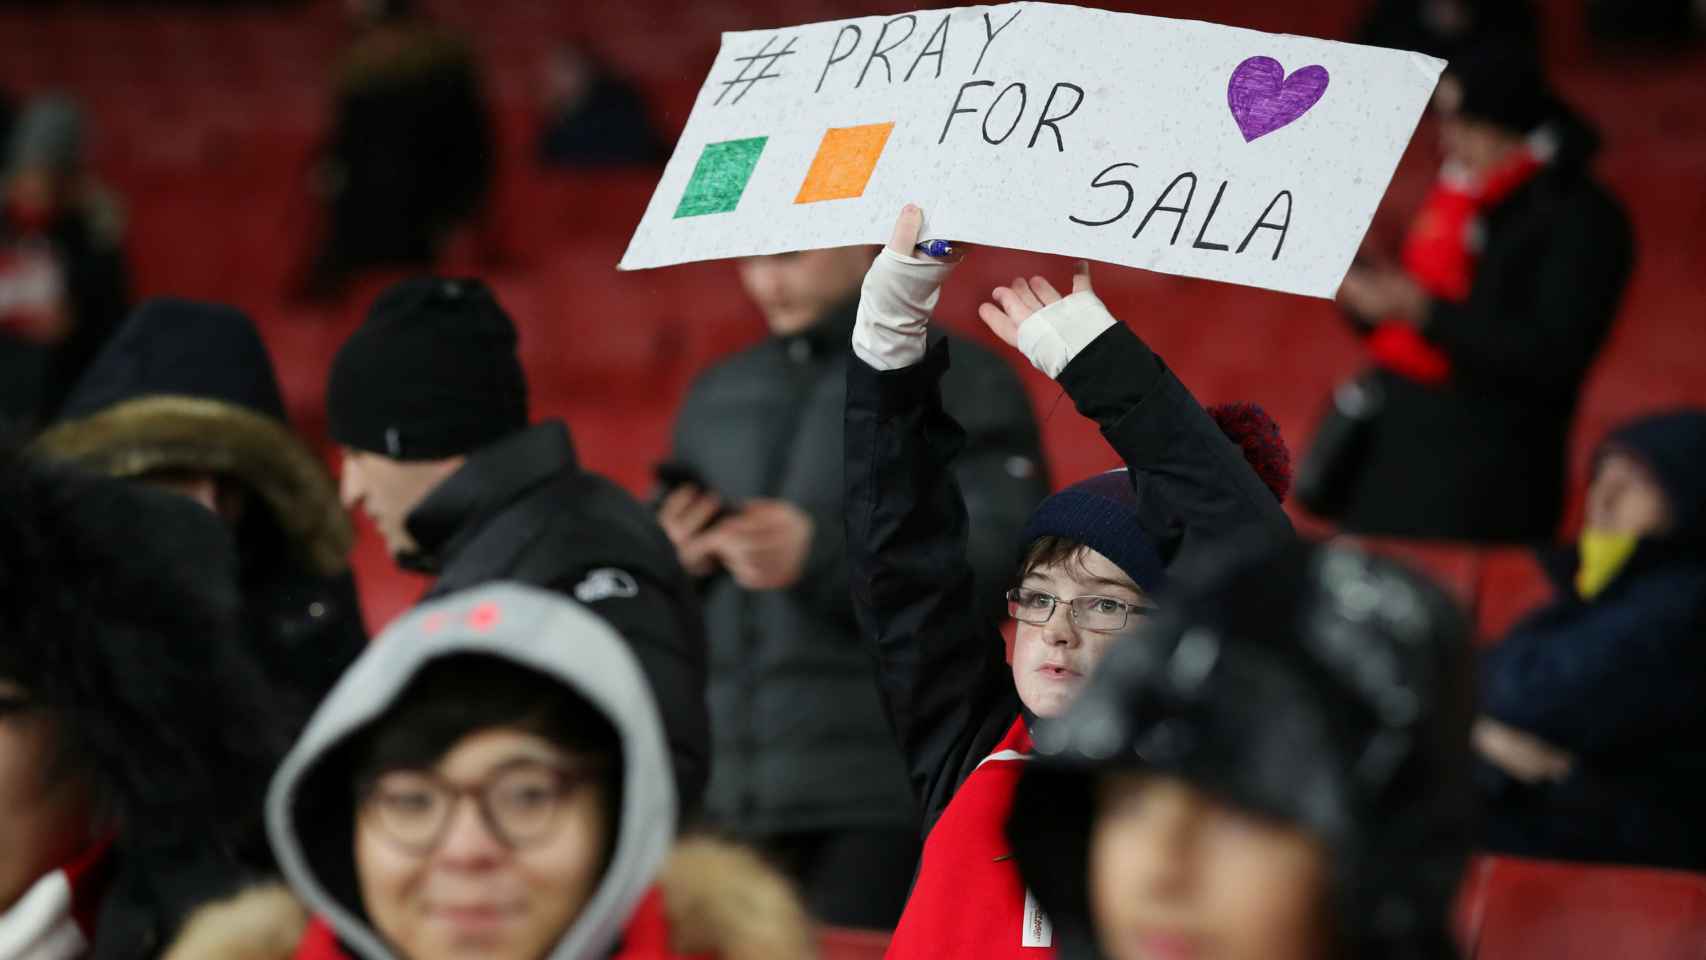 Homenaje a Emiliano Sala en el Arsenal - Cardiff